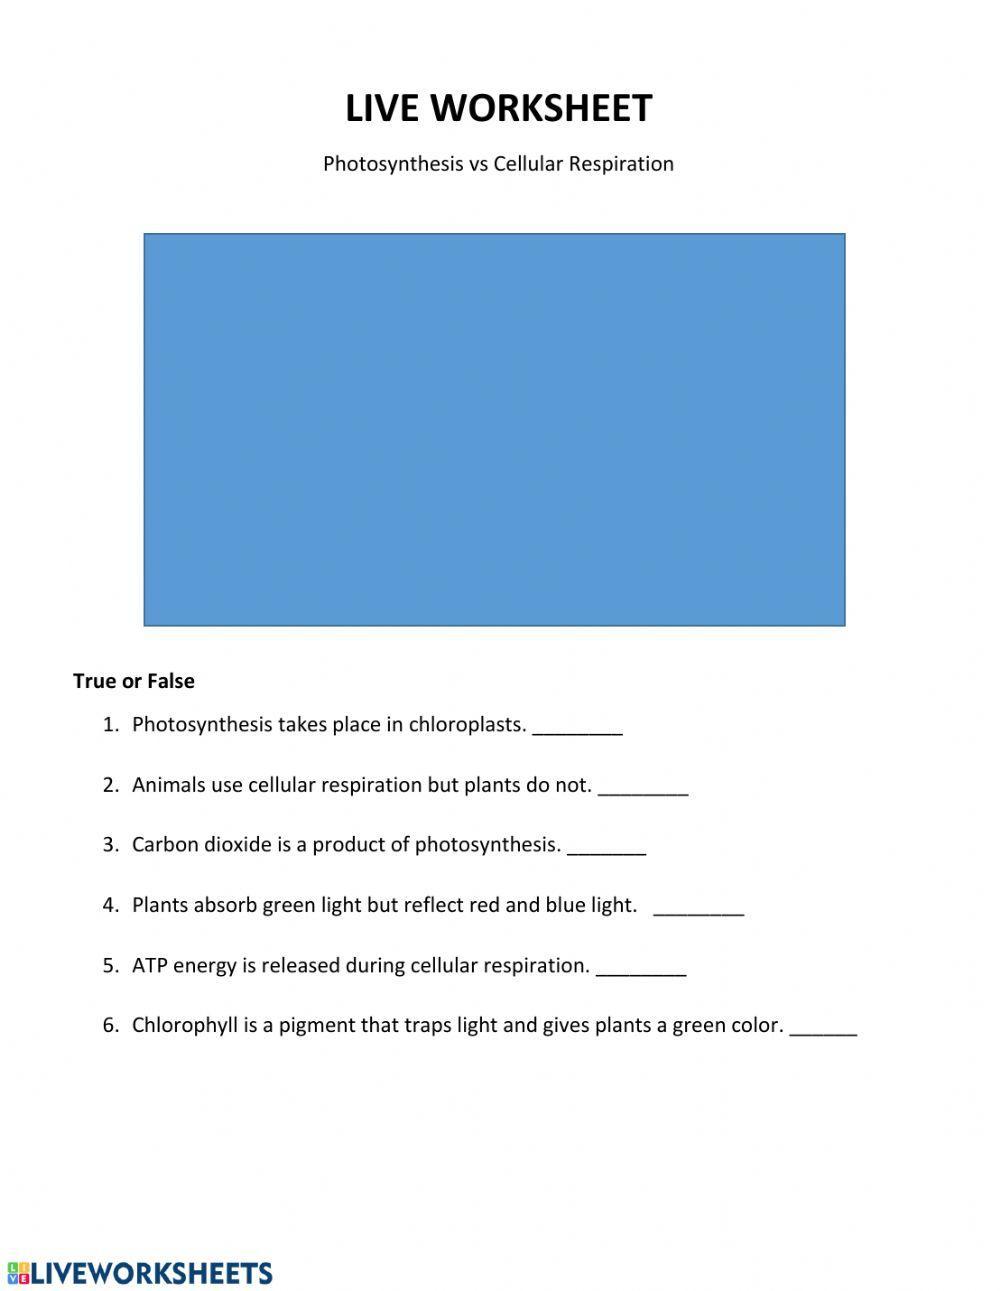 Live Work Sheet: Photosynthesis vs Cellular Respiration